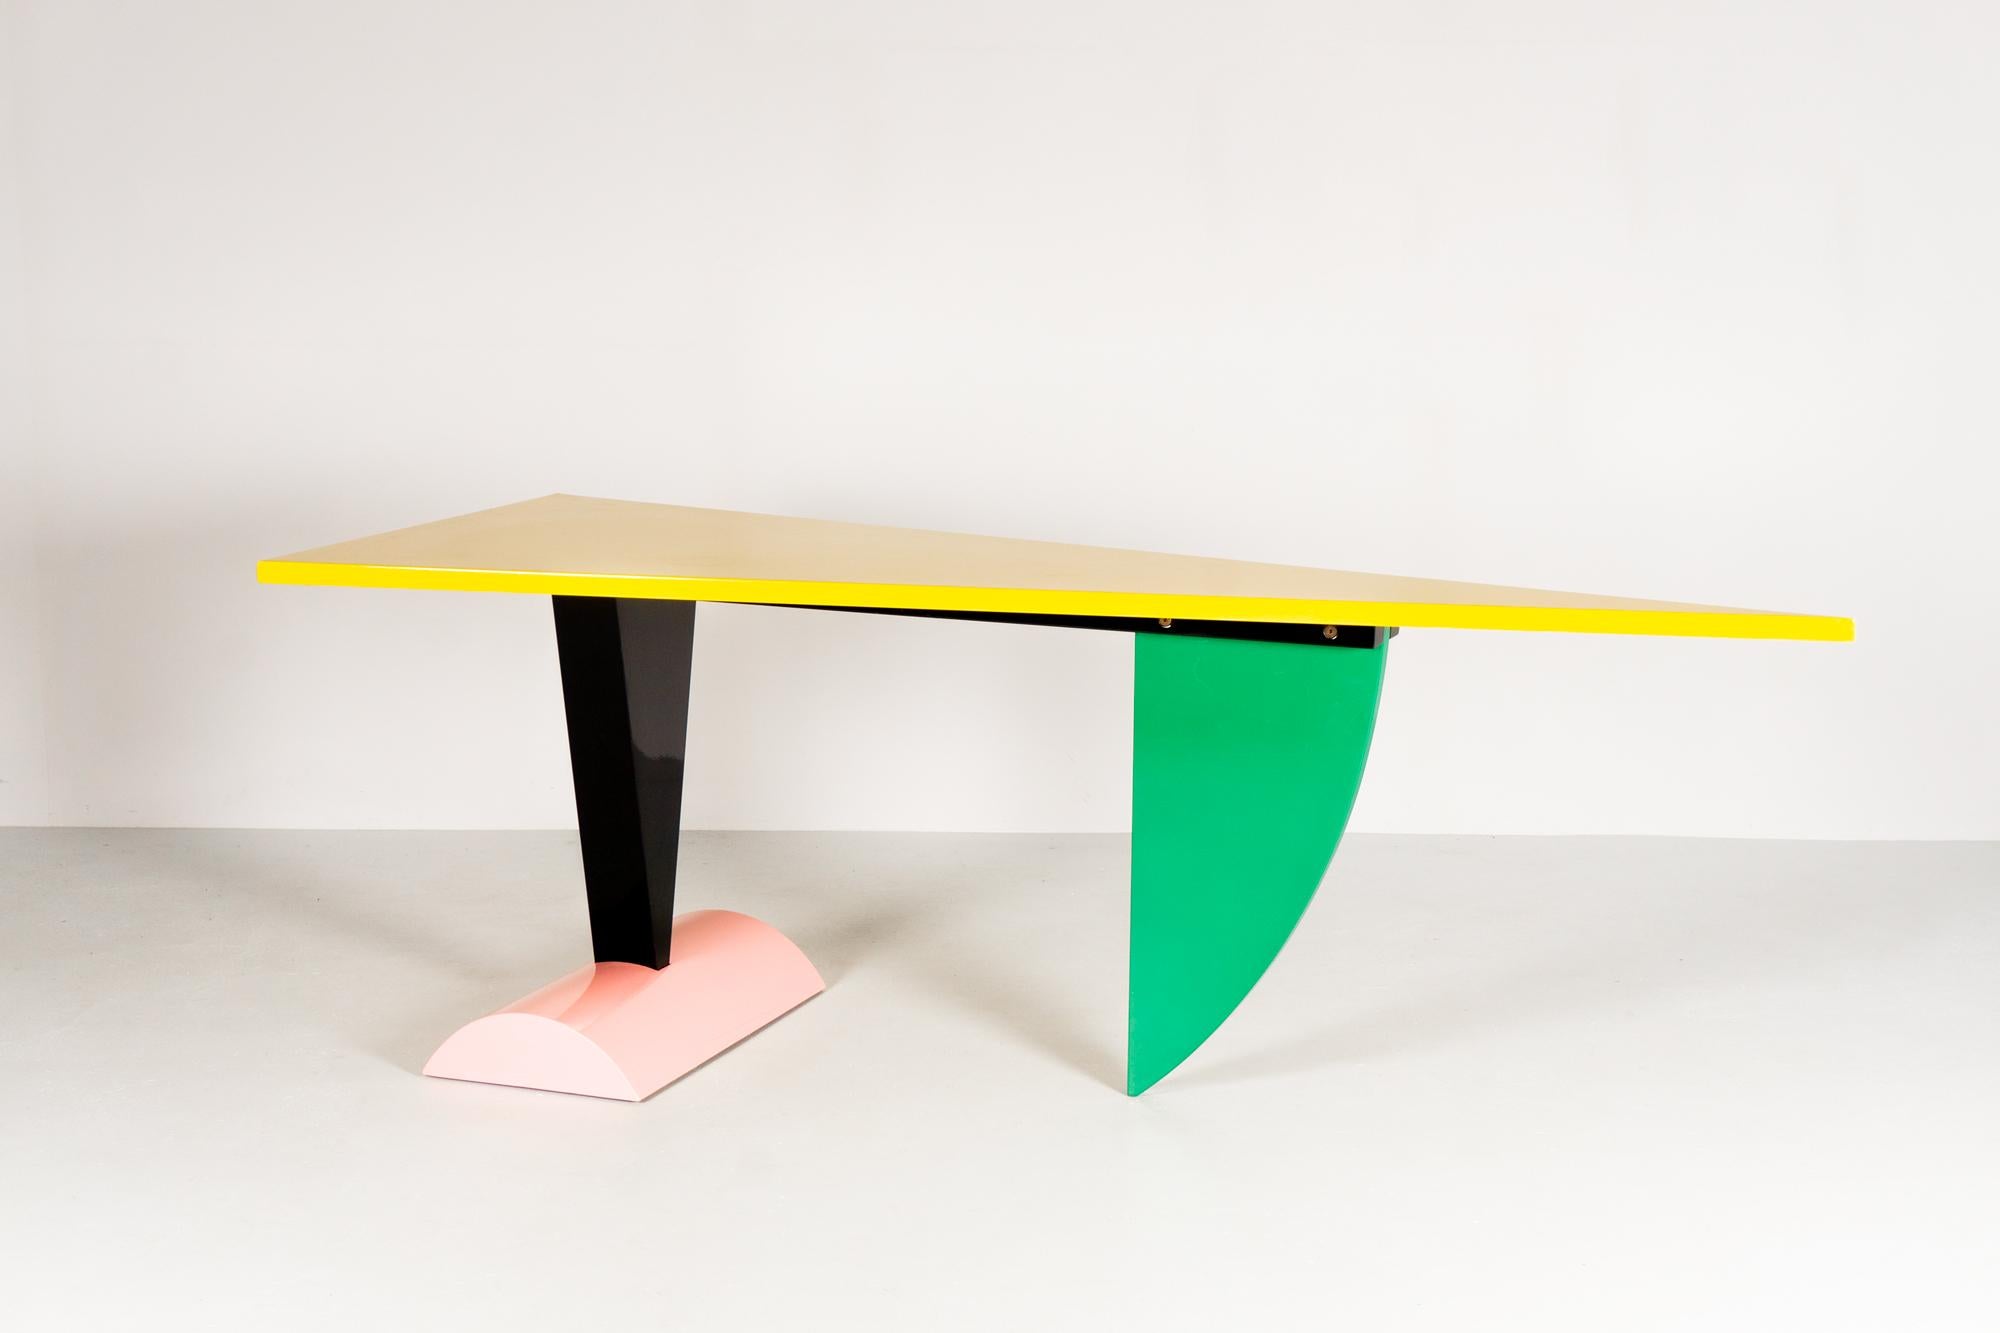 brazil table